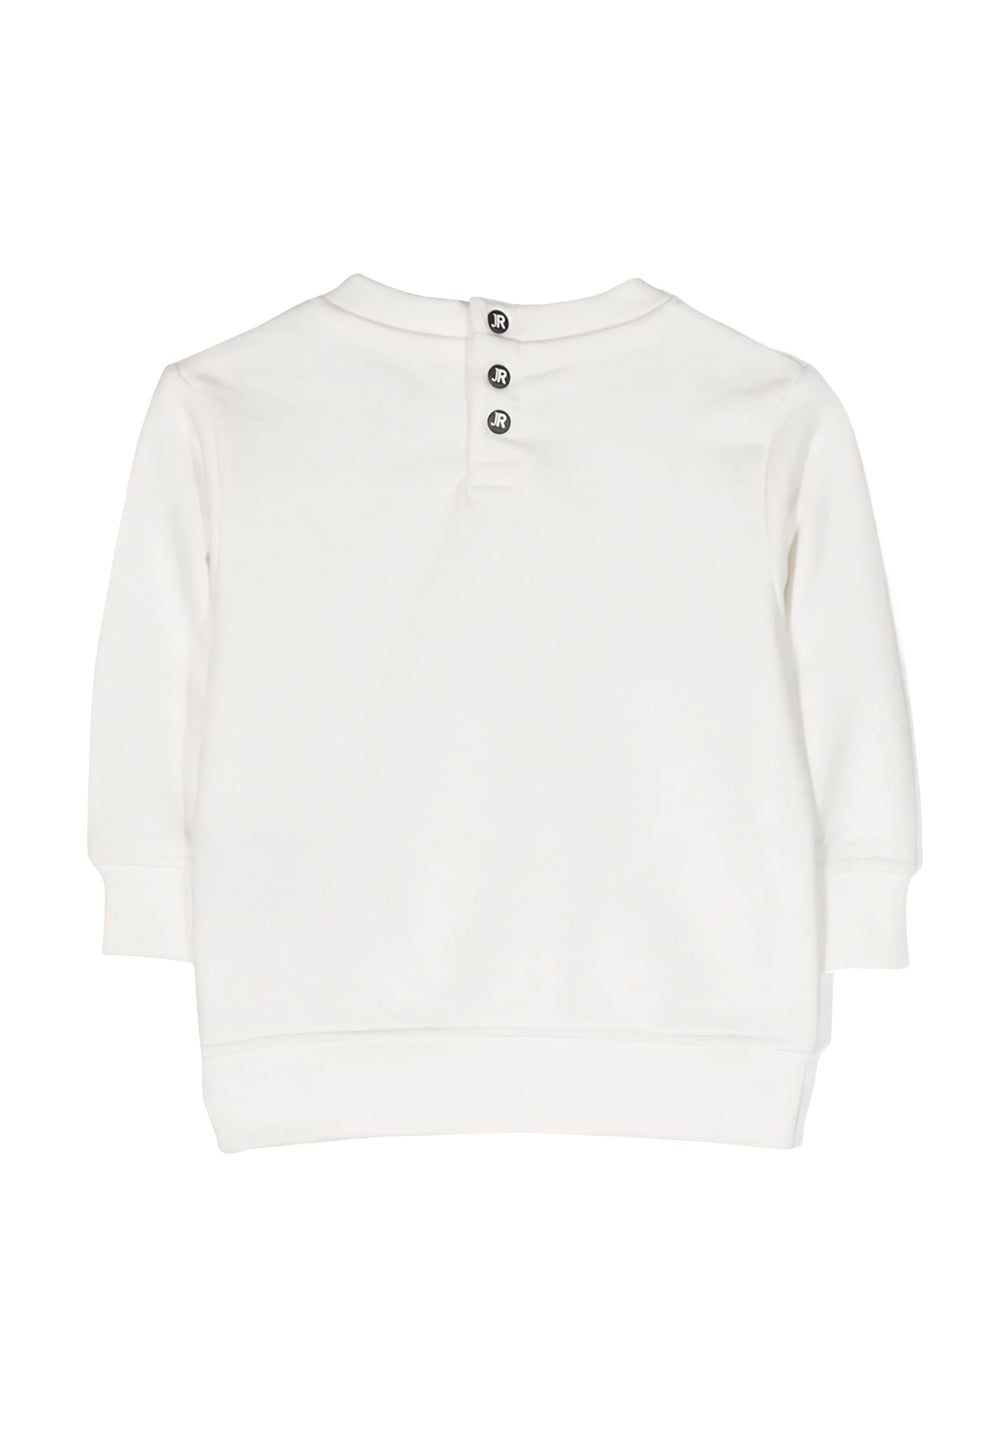 White crewneck sweatshirt for newborn